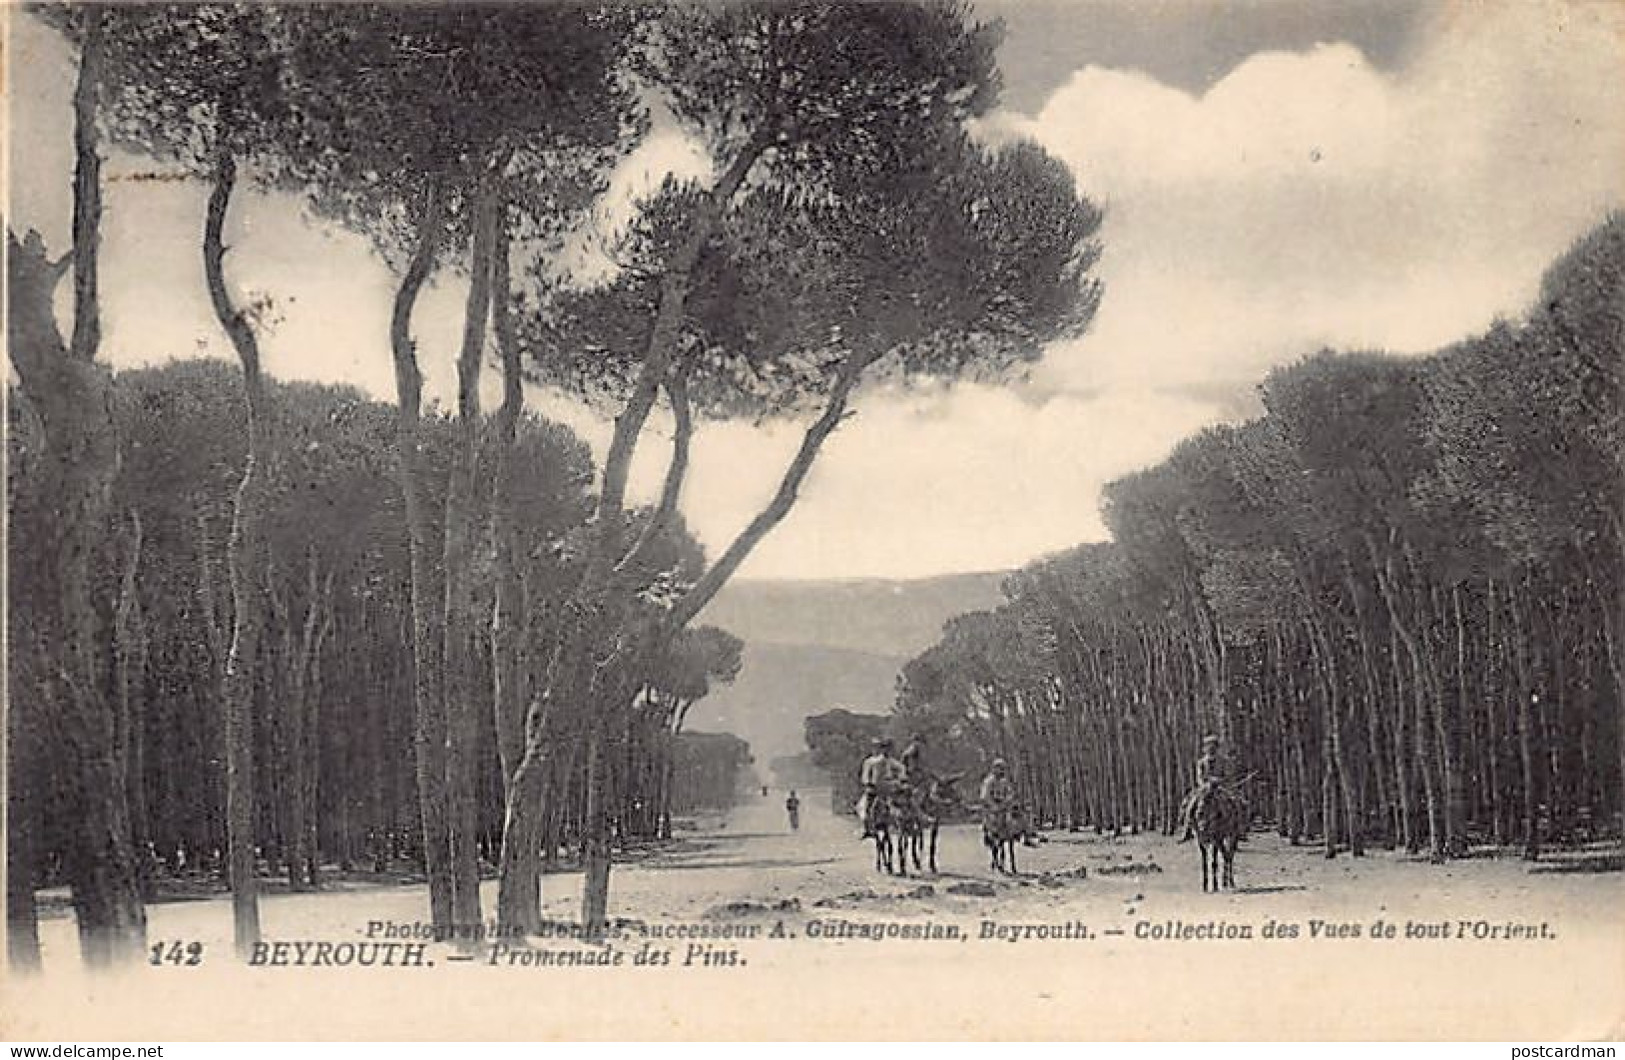 Liban - BEYROUTH - Promenade Des Pins - Ed. Photographie Bonfils, Successeur A. Guiragossian 142 - Lebanon